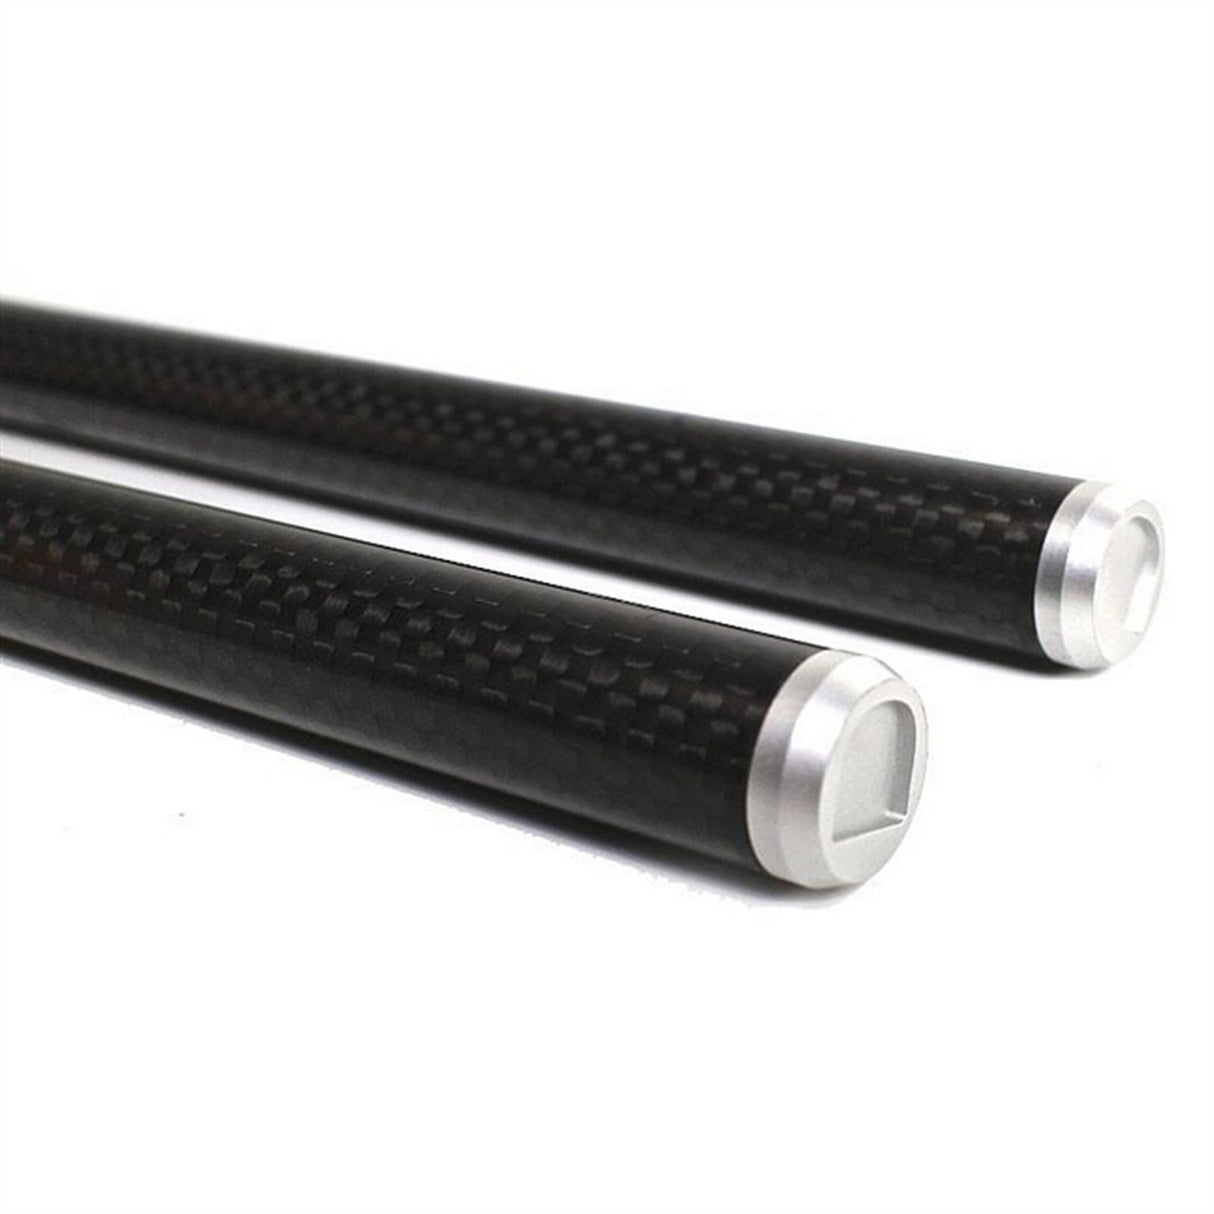 Genustech G-DCFR550 Deluxe Carbon Fiber Rods, 550mm, Pair